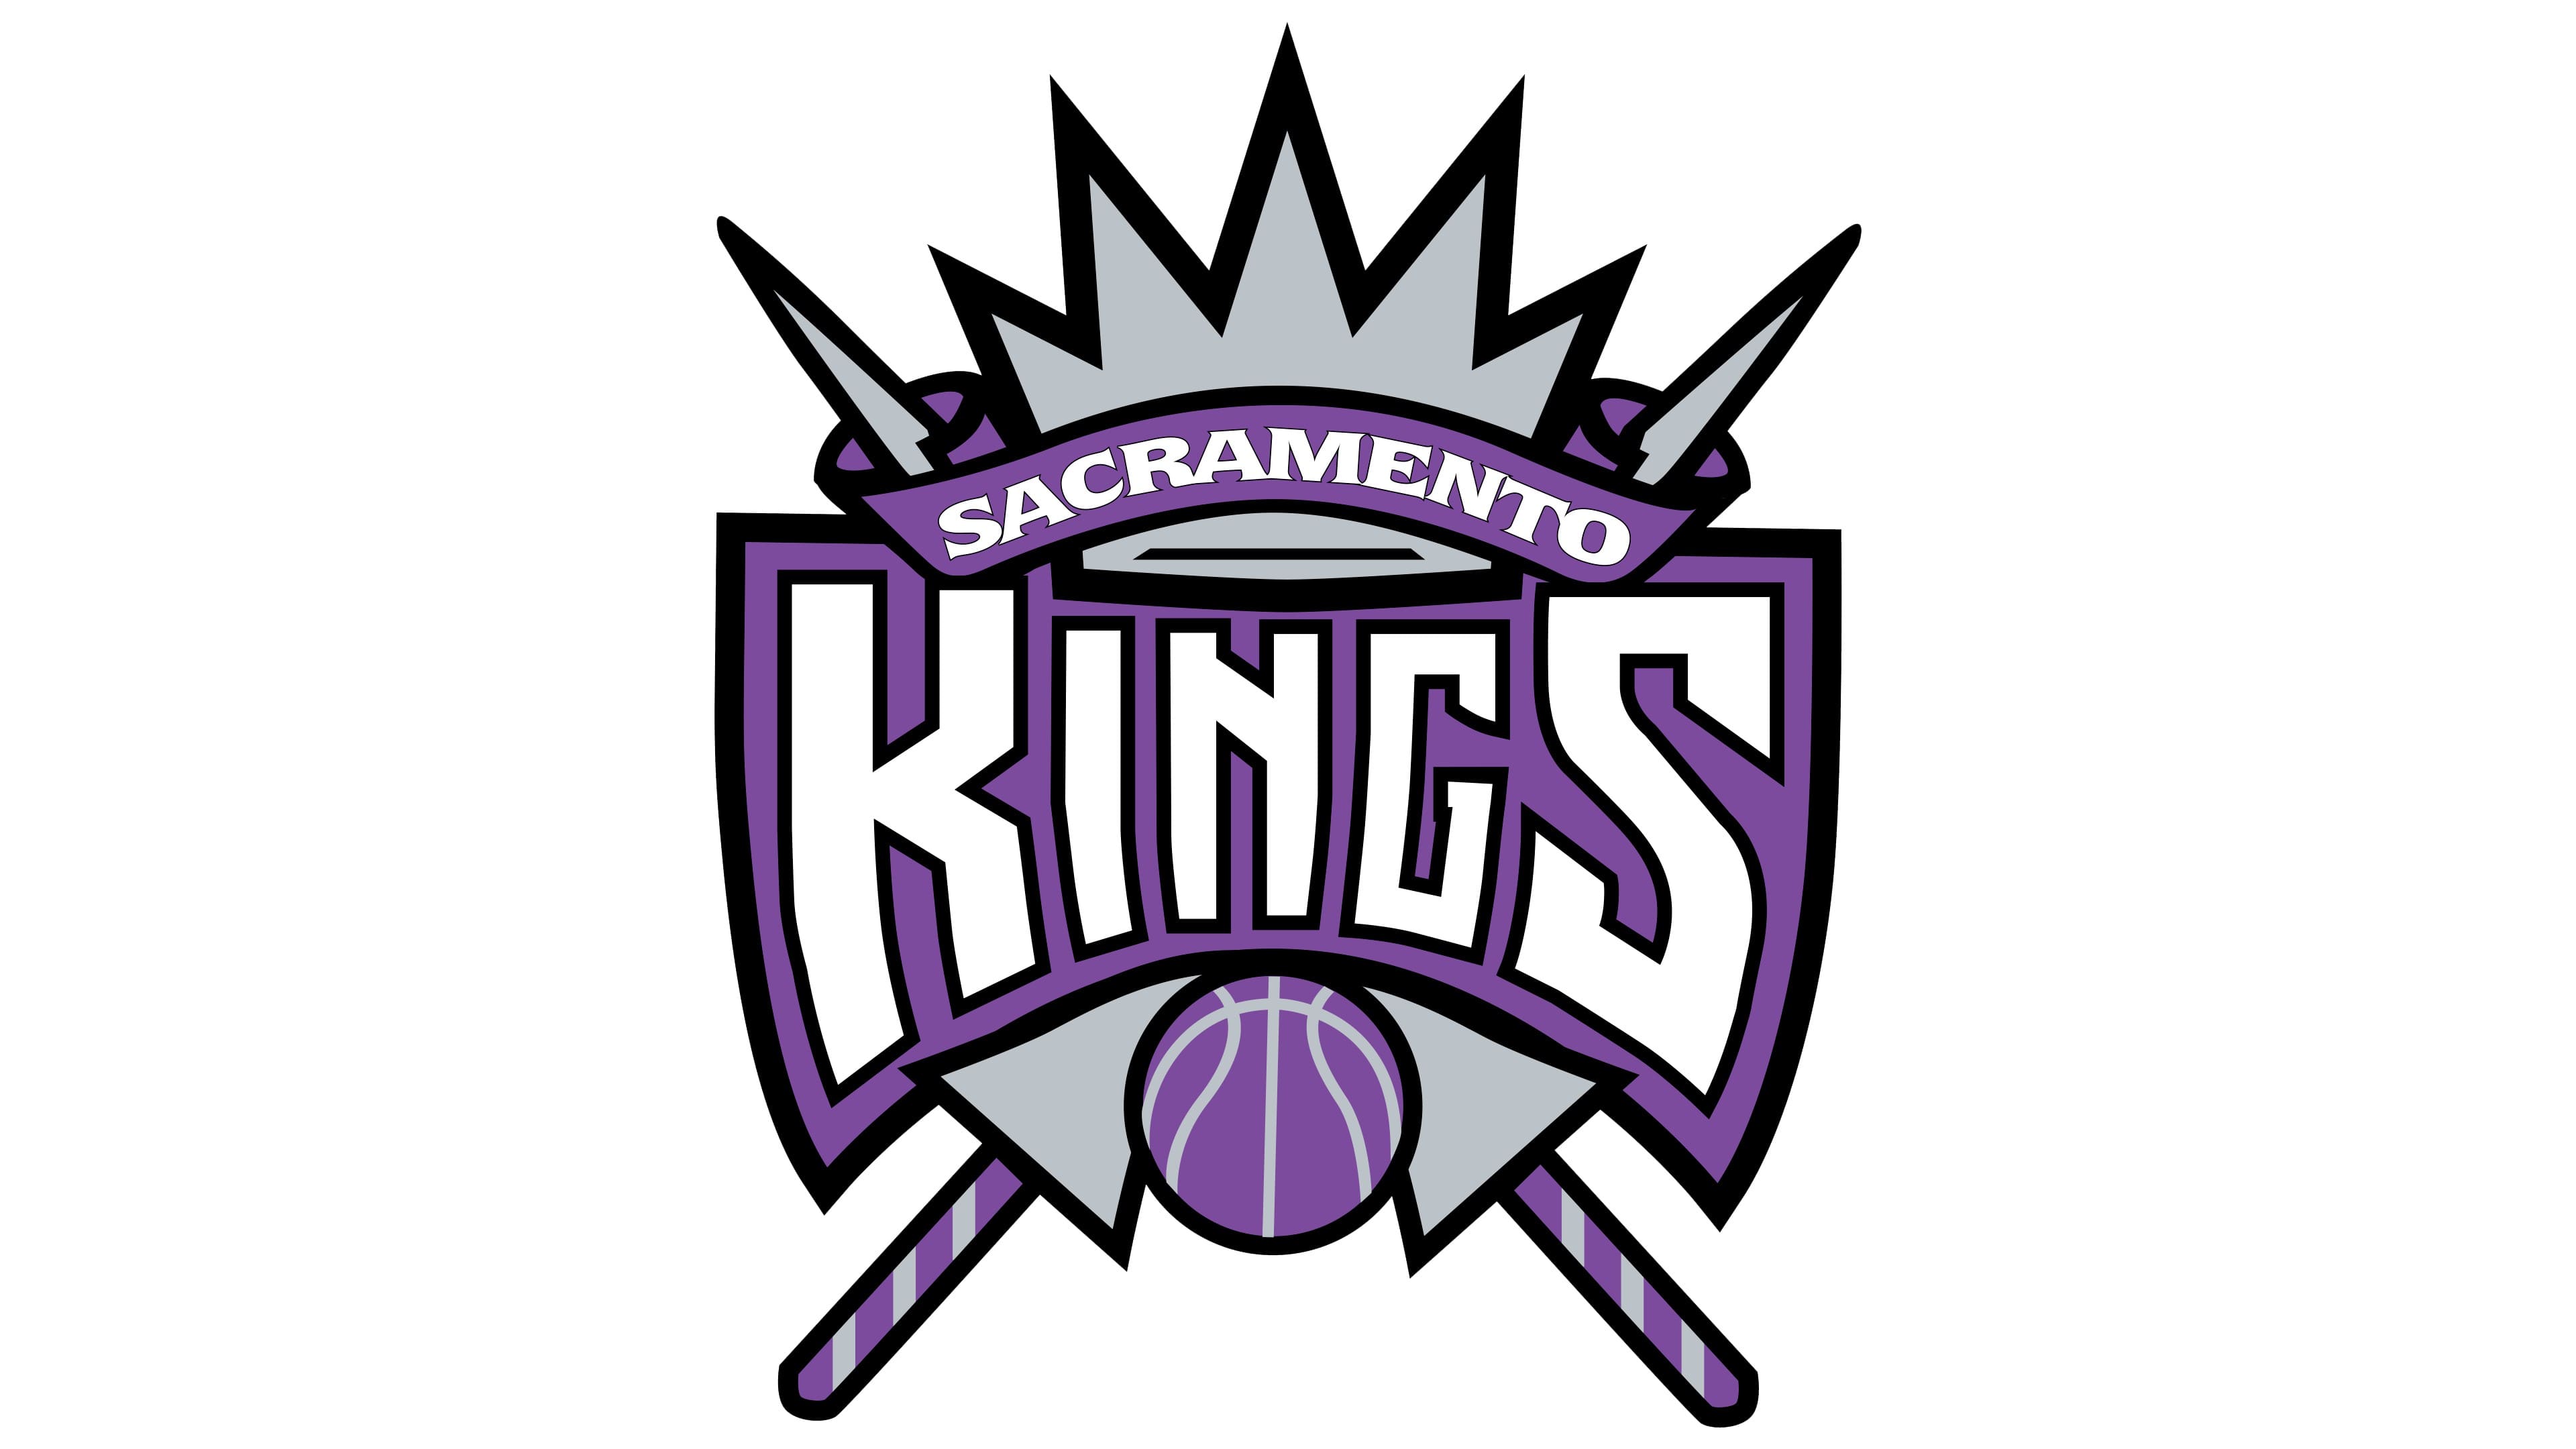 Sacramento Kings History - Team Origins, Logos & Jerseys 